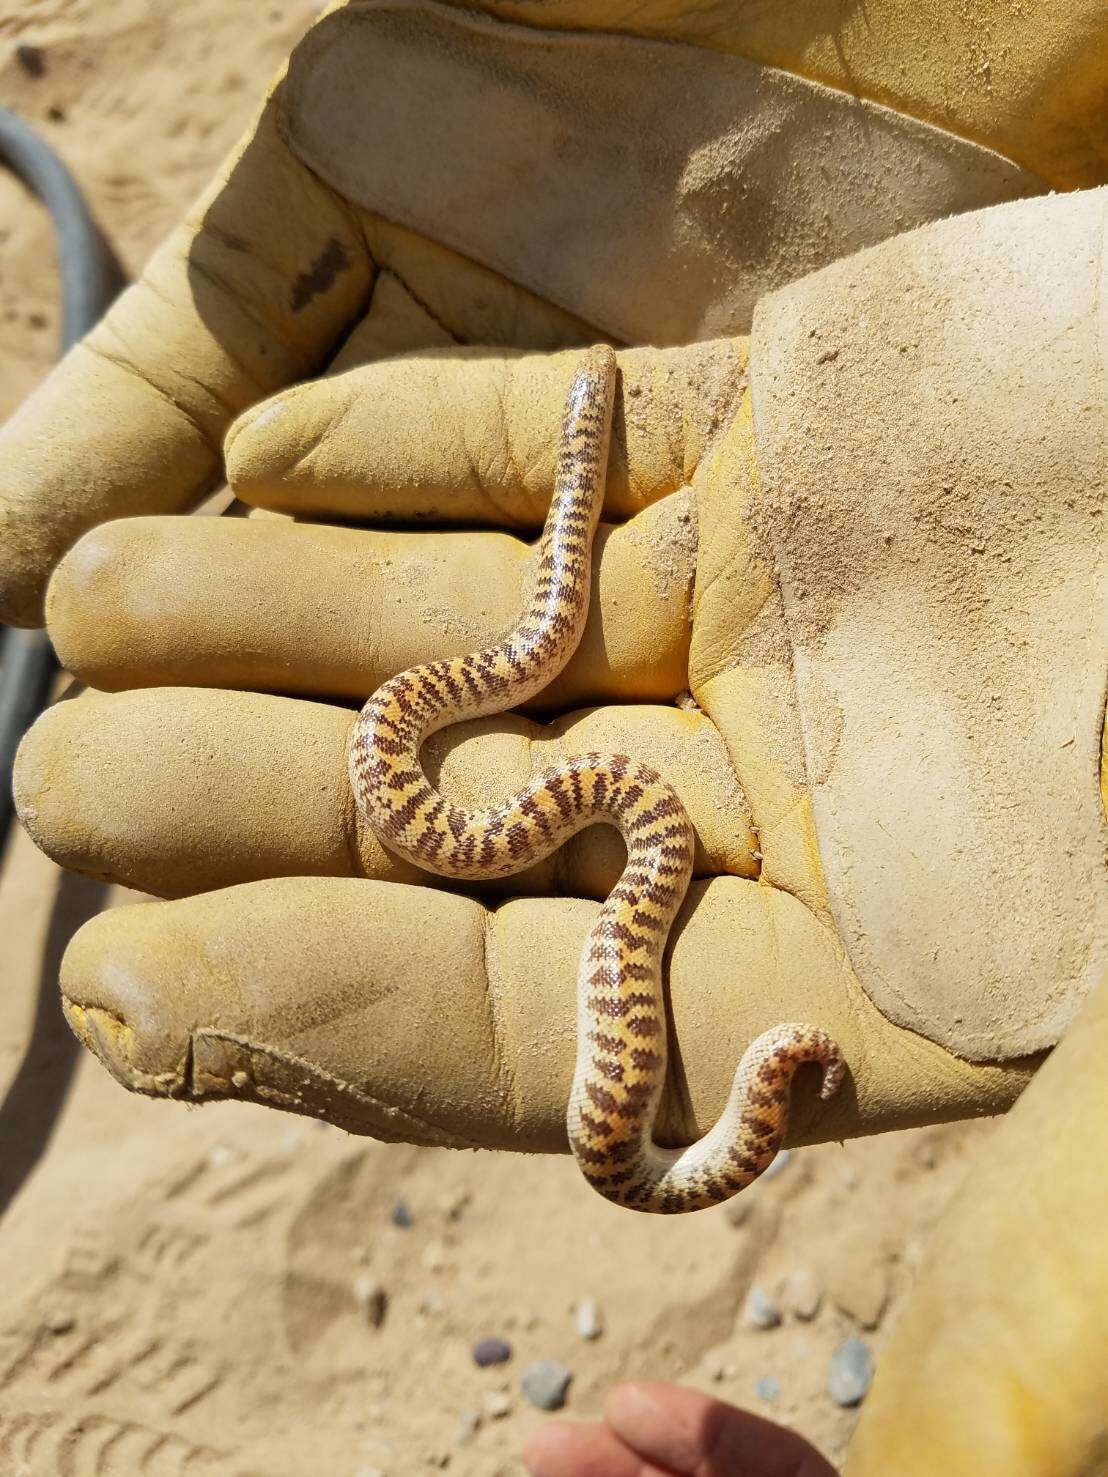 Image of Arabian Sand Boa